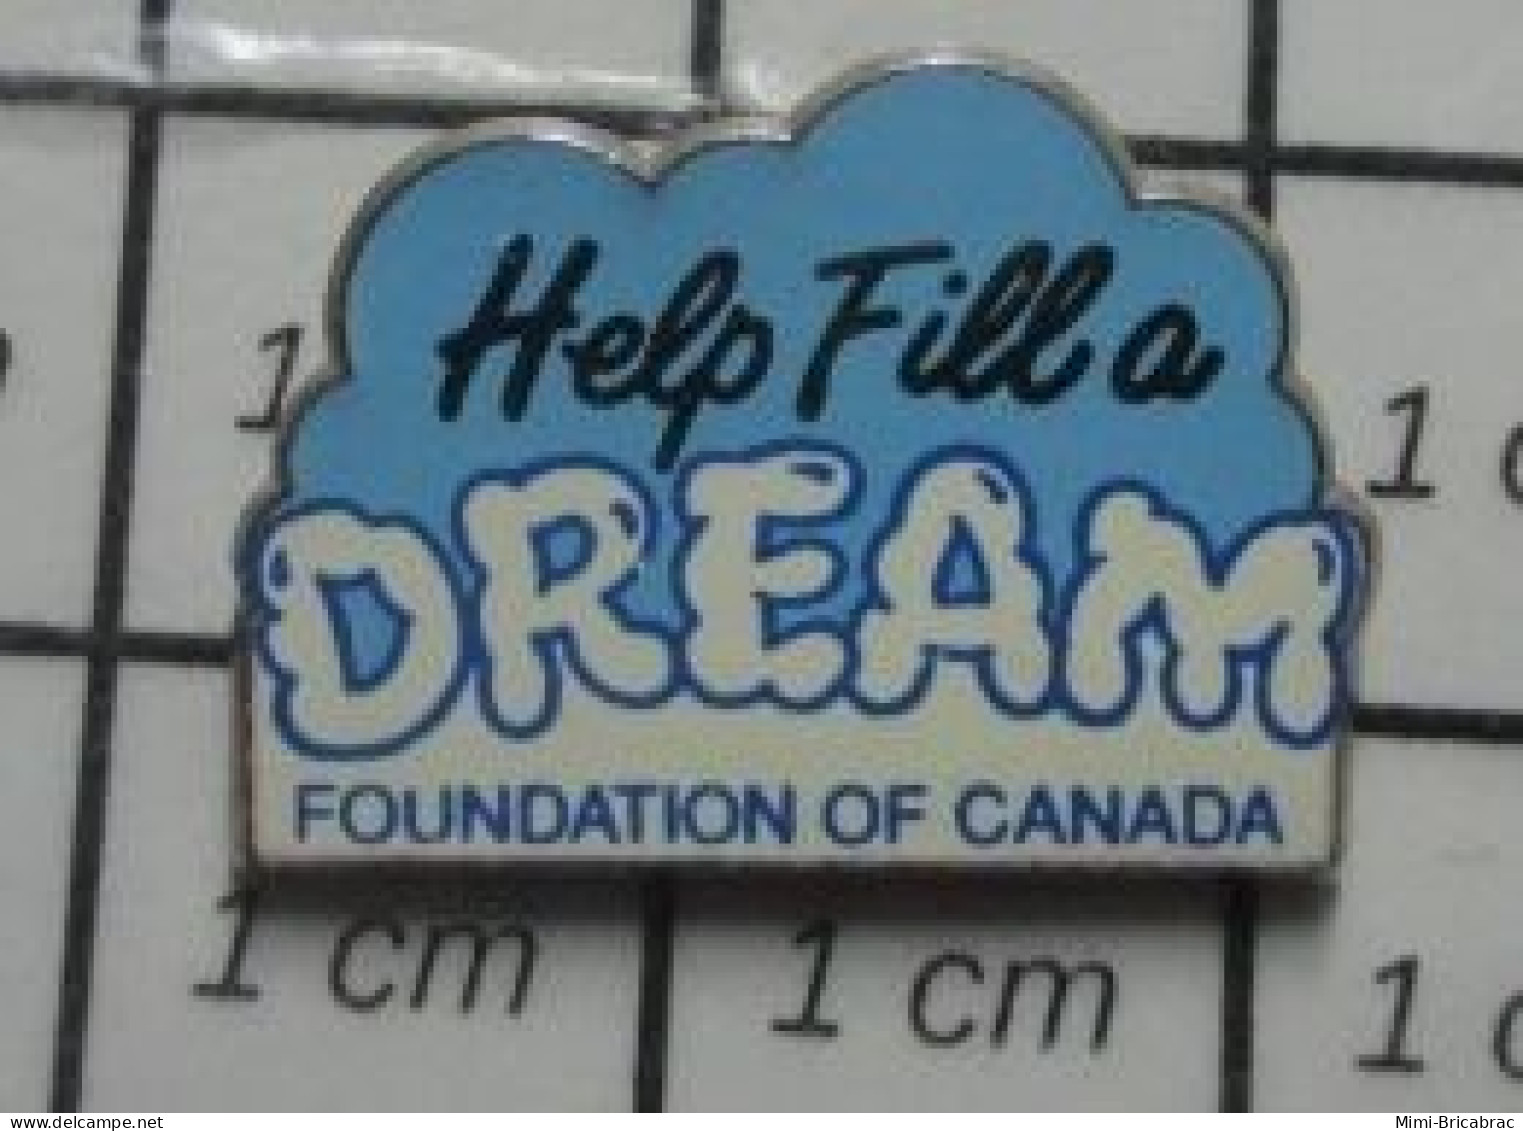 811B Pin's Pins / Beau Et Rare / ASSOCIATIONS / HELP FILL A DREAM FOUNDATION OF CANADA - Associations